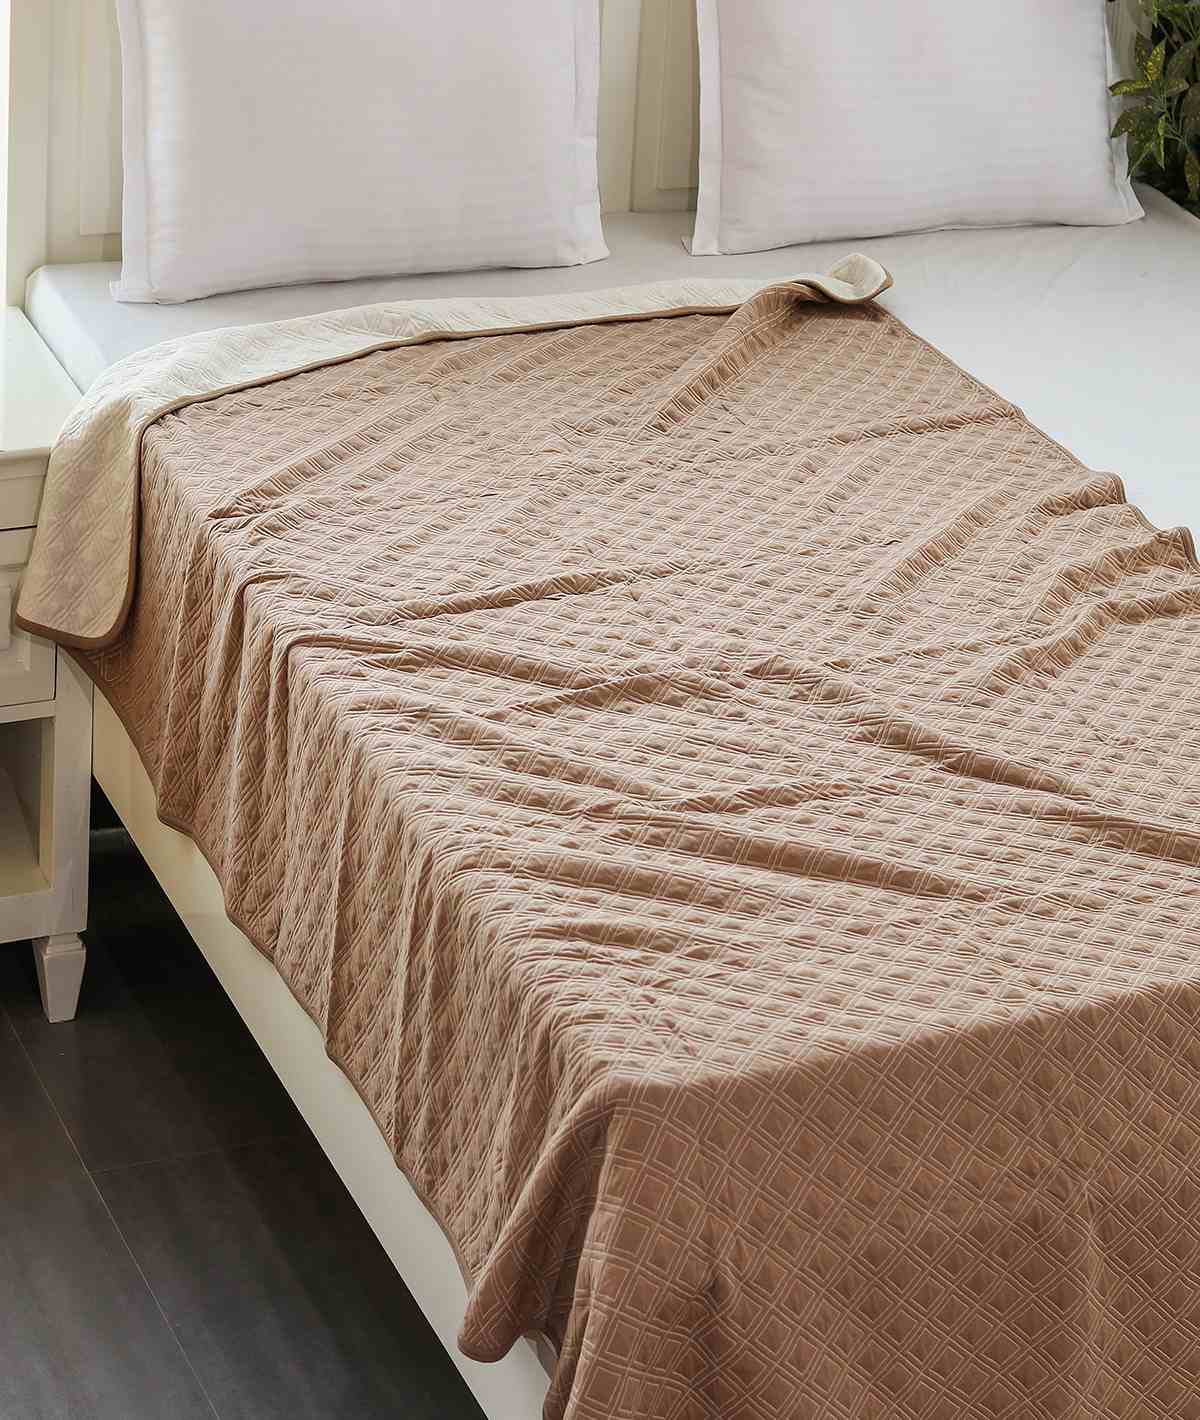 single bed quilt blanket